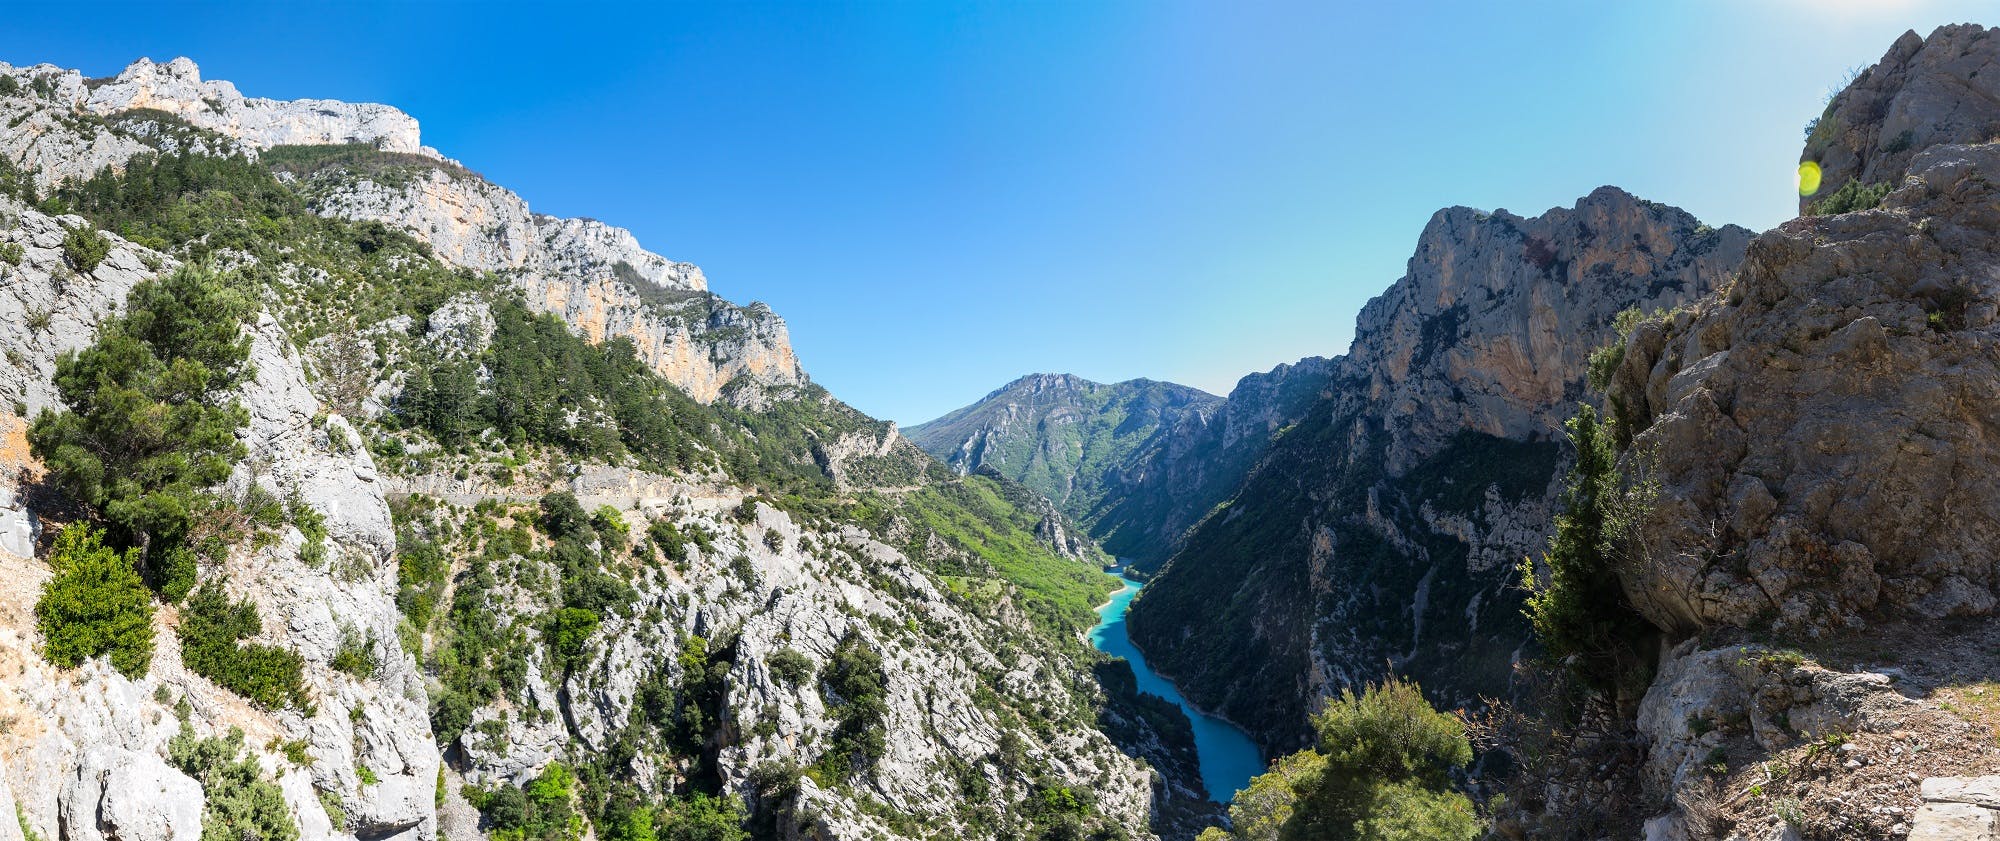 Tour de un día en Verdon Canyon y Moustiers Sainte Marie desde Aix en Provence